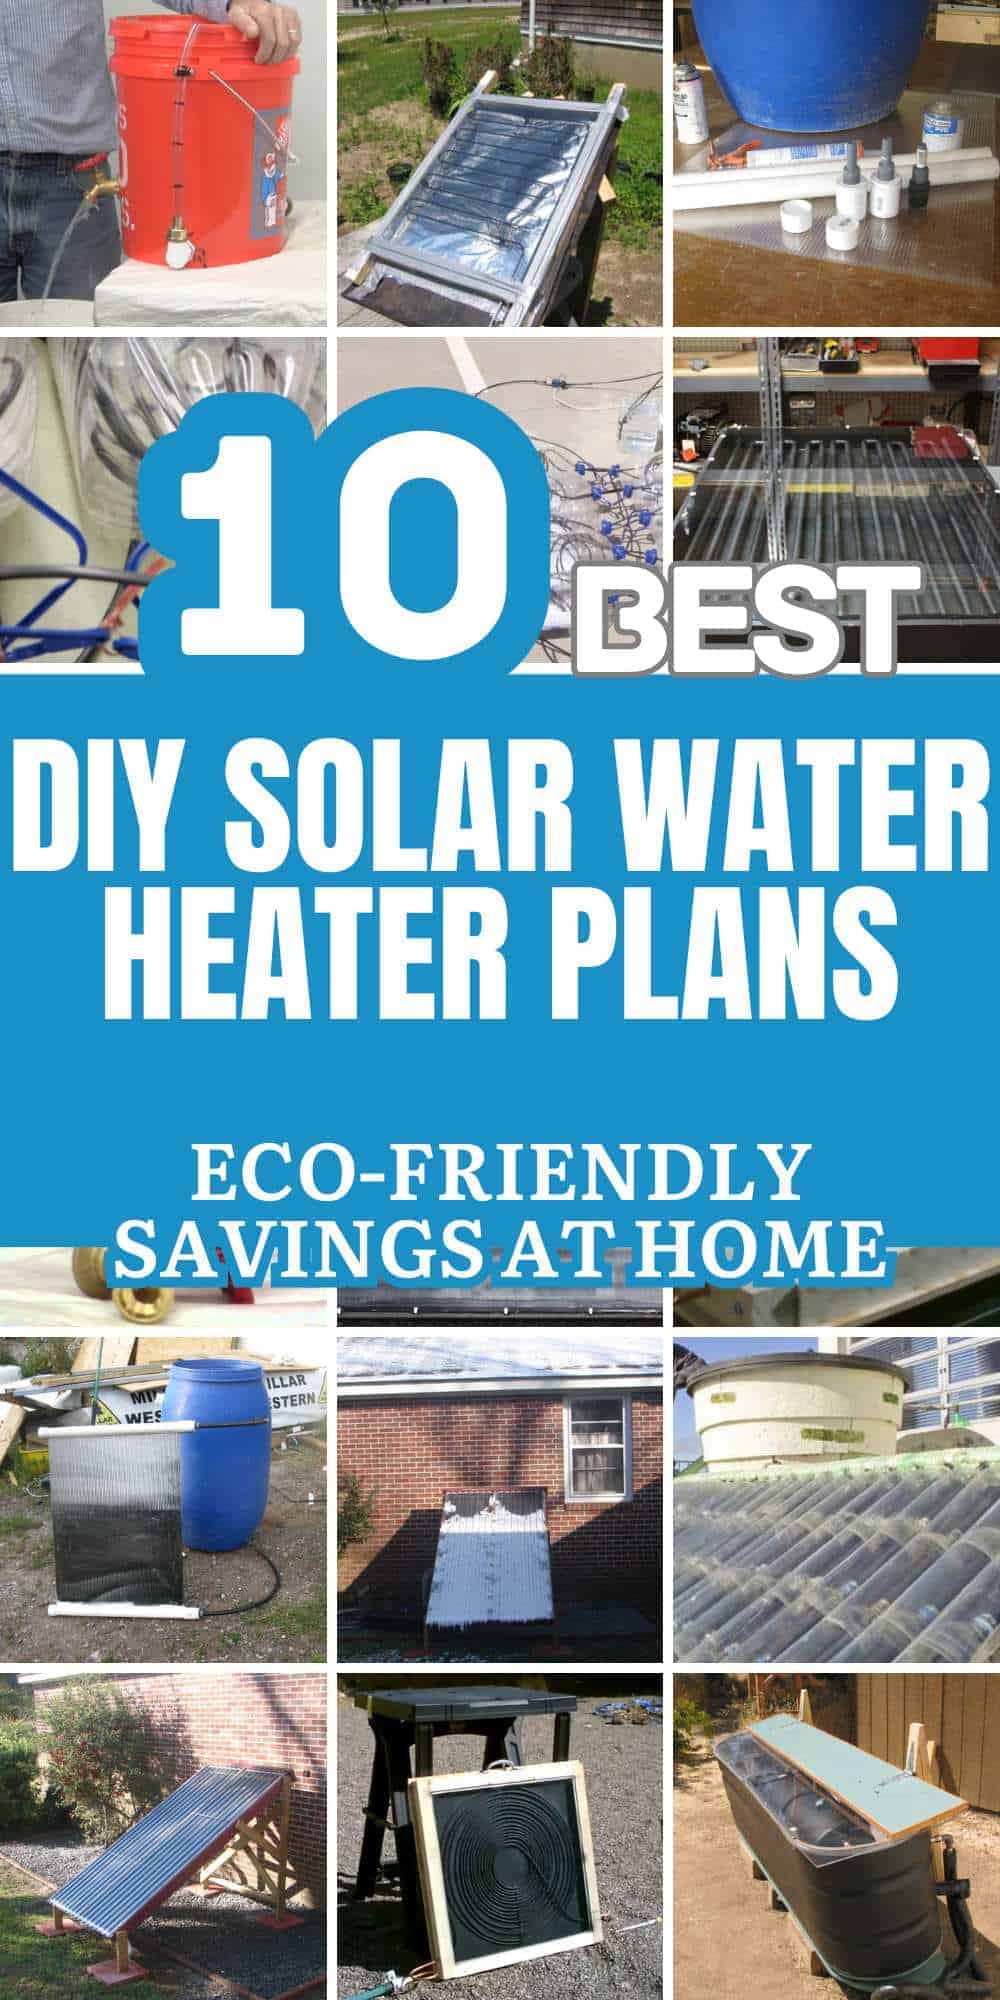 DIY-Solar-Water-Heater-Plans